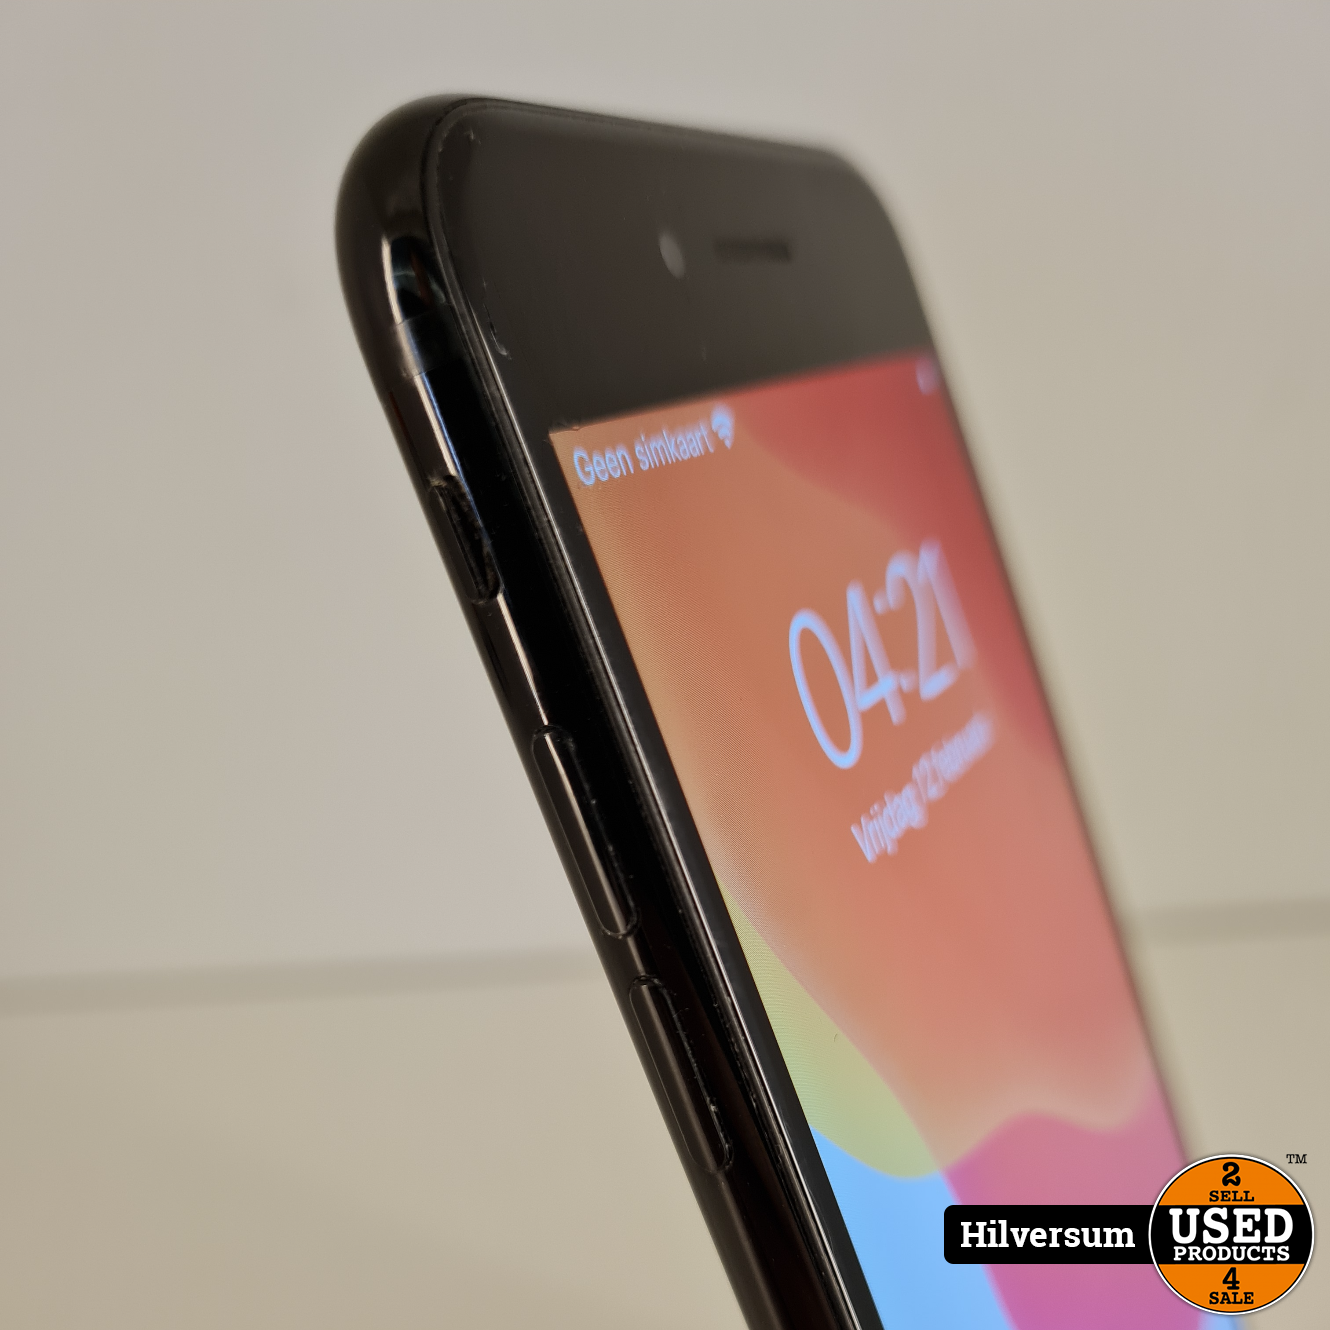 Humaan breken dennenboom Apple iPhone 7 32GB Jetblack - Used Products Hilversum